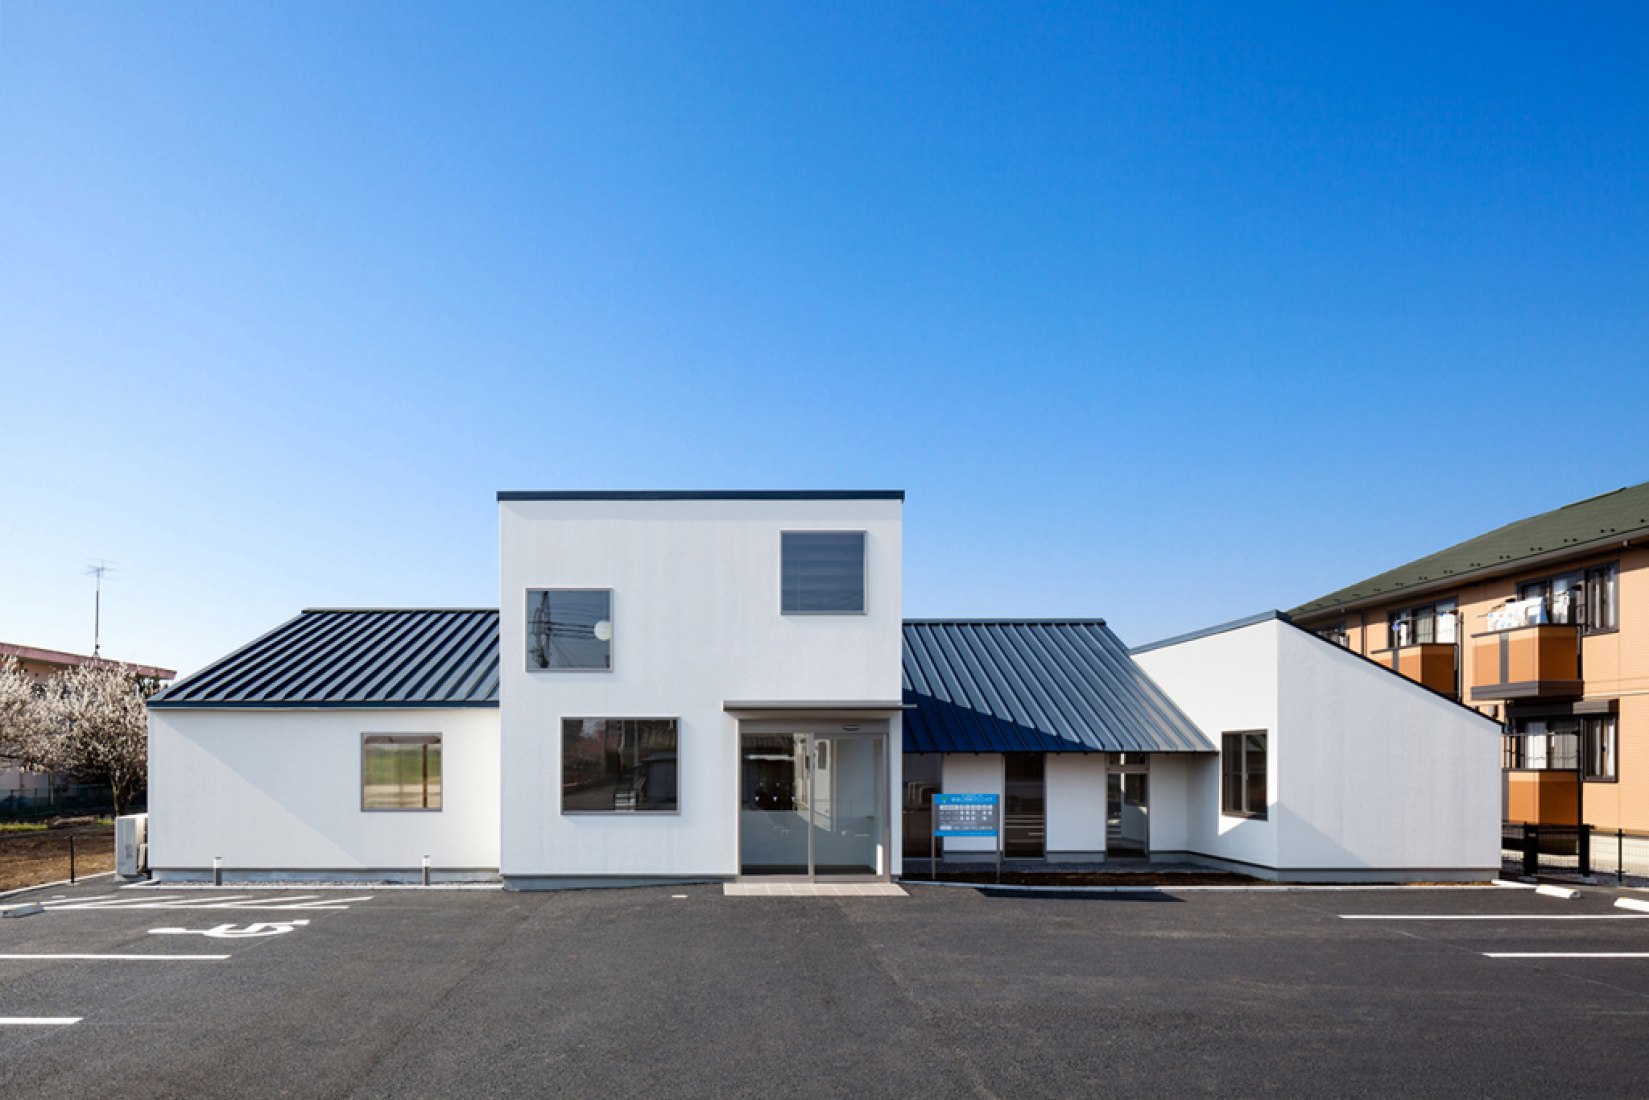 Y-clinic by Kimitaka Aoki + ARCO architects. Photography © Ippei Shinzawa.